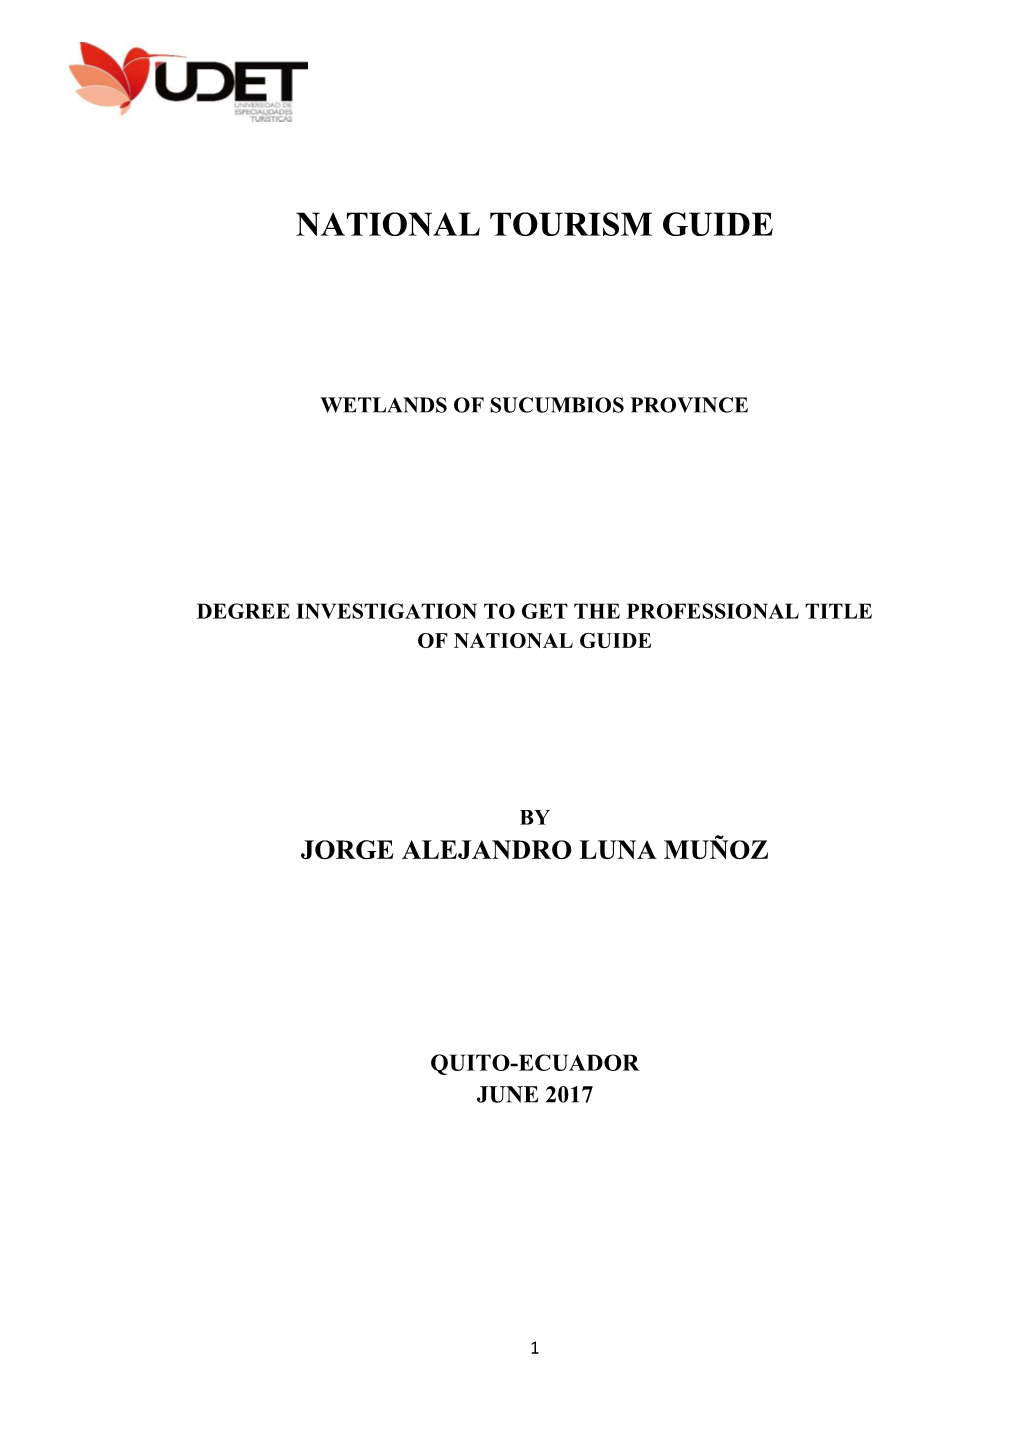 National Tourism Guide